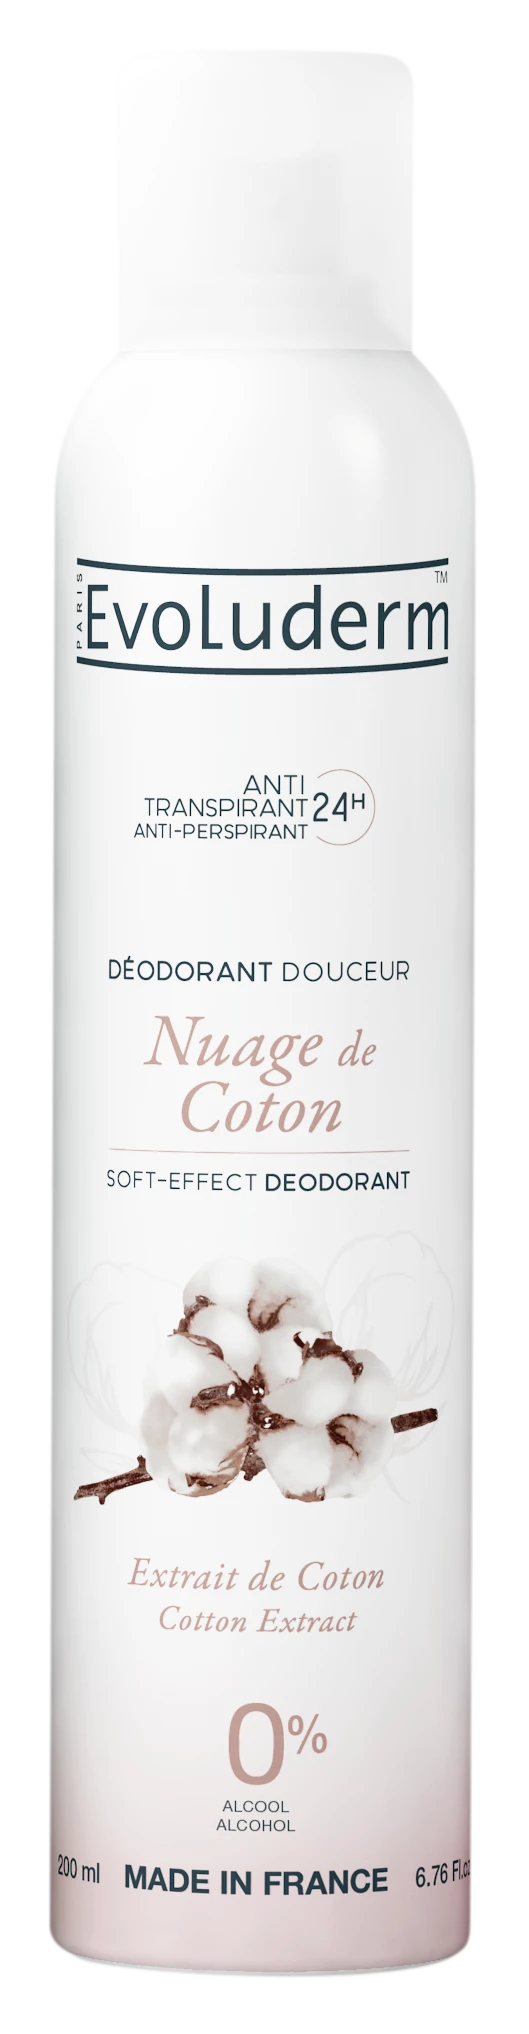 Déodorant Douceur Anti-transpirant Nuage De Coton 200ml - Evoluderm